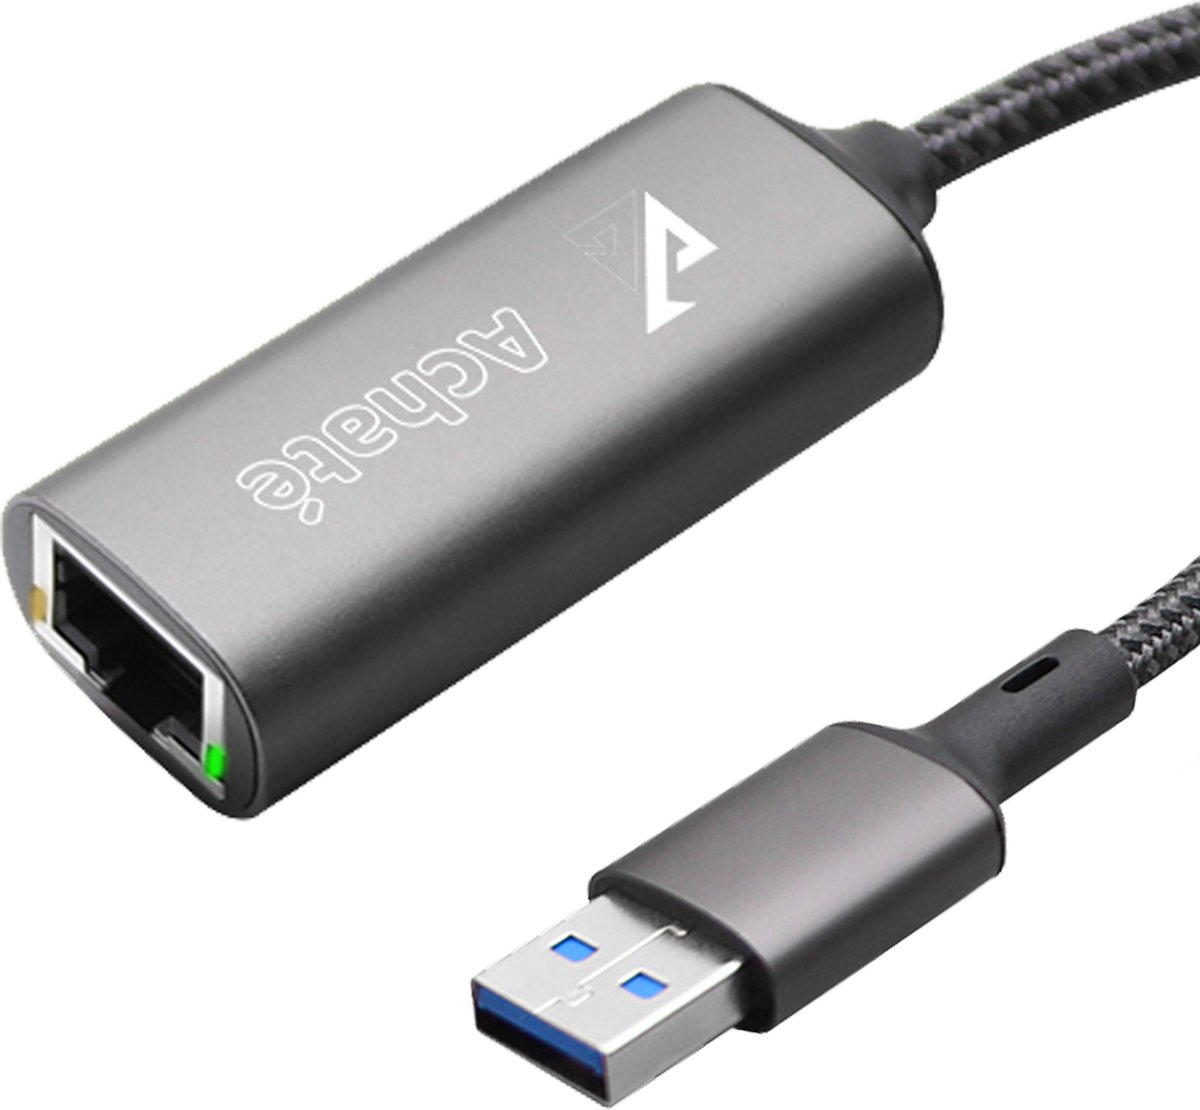 Achaté USB 3.0 naar Ethernet Adapter - 10/100/1000 Mbps - Internet en Netwerk - Grijs